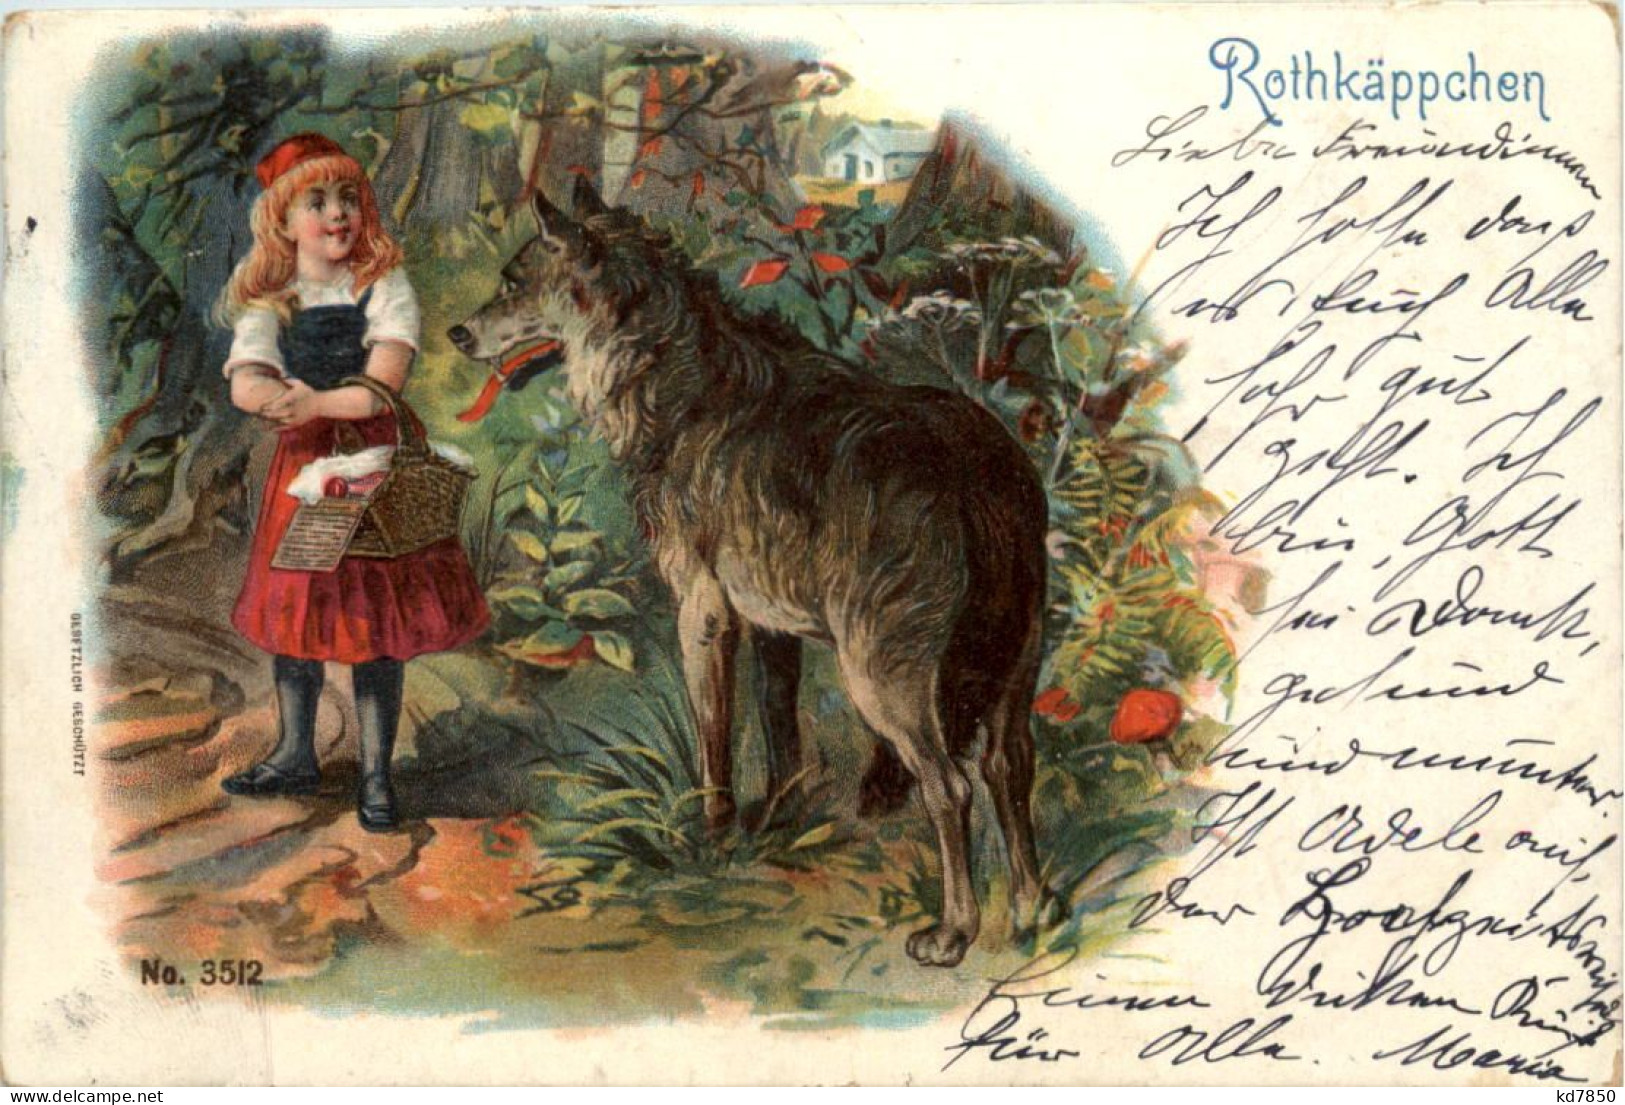 Märchen - Rotkäppchen - Fairy Tales, Popular Stories & Legends